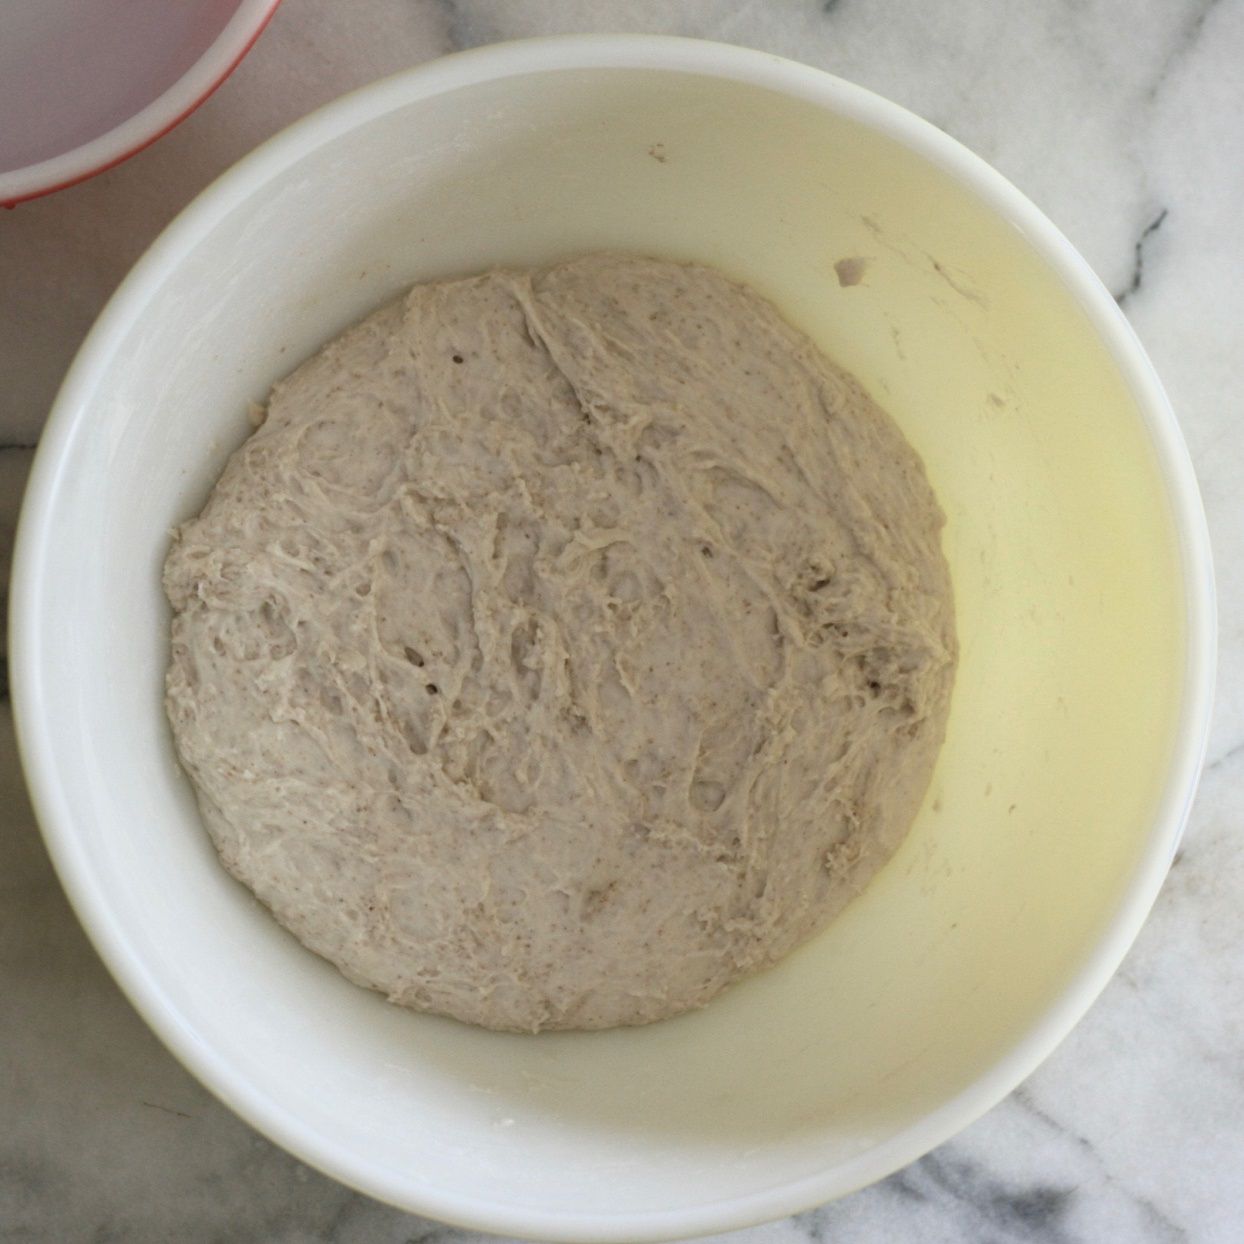 sourdough bread dough resting in a bowl